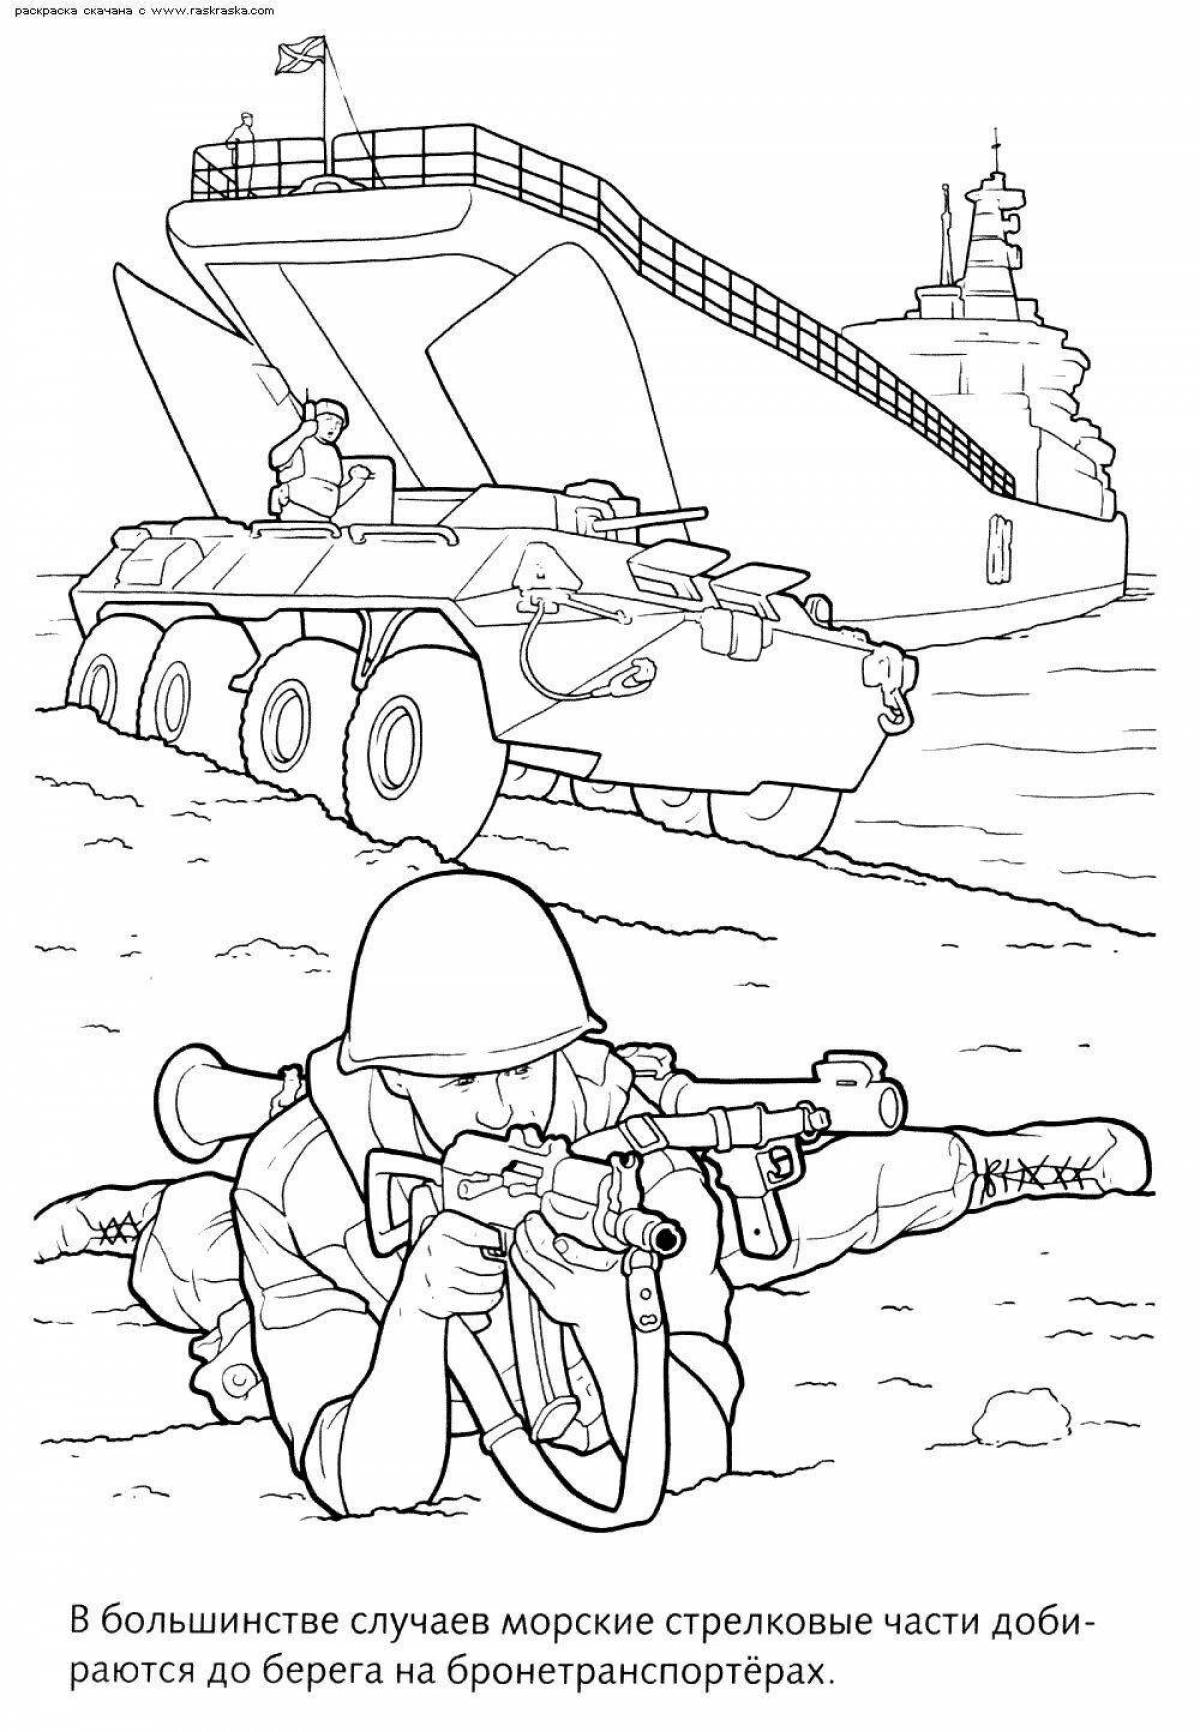 Playful war drawing for kids